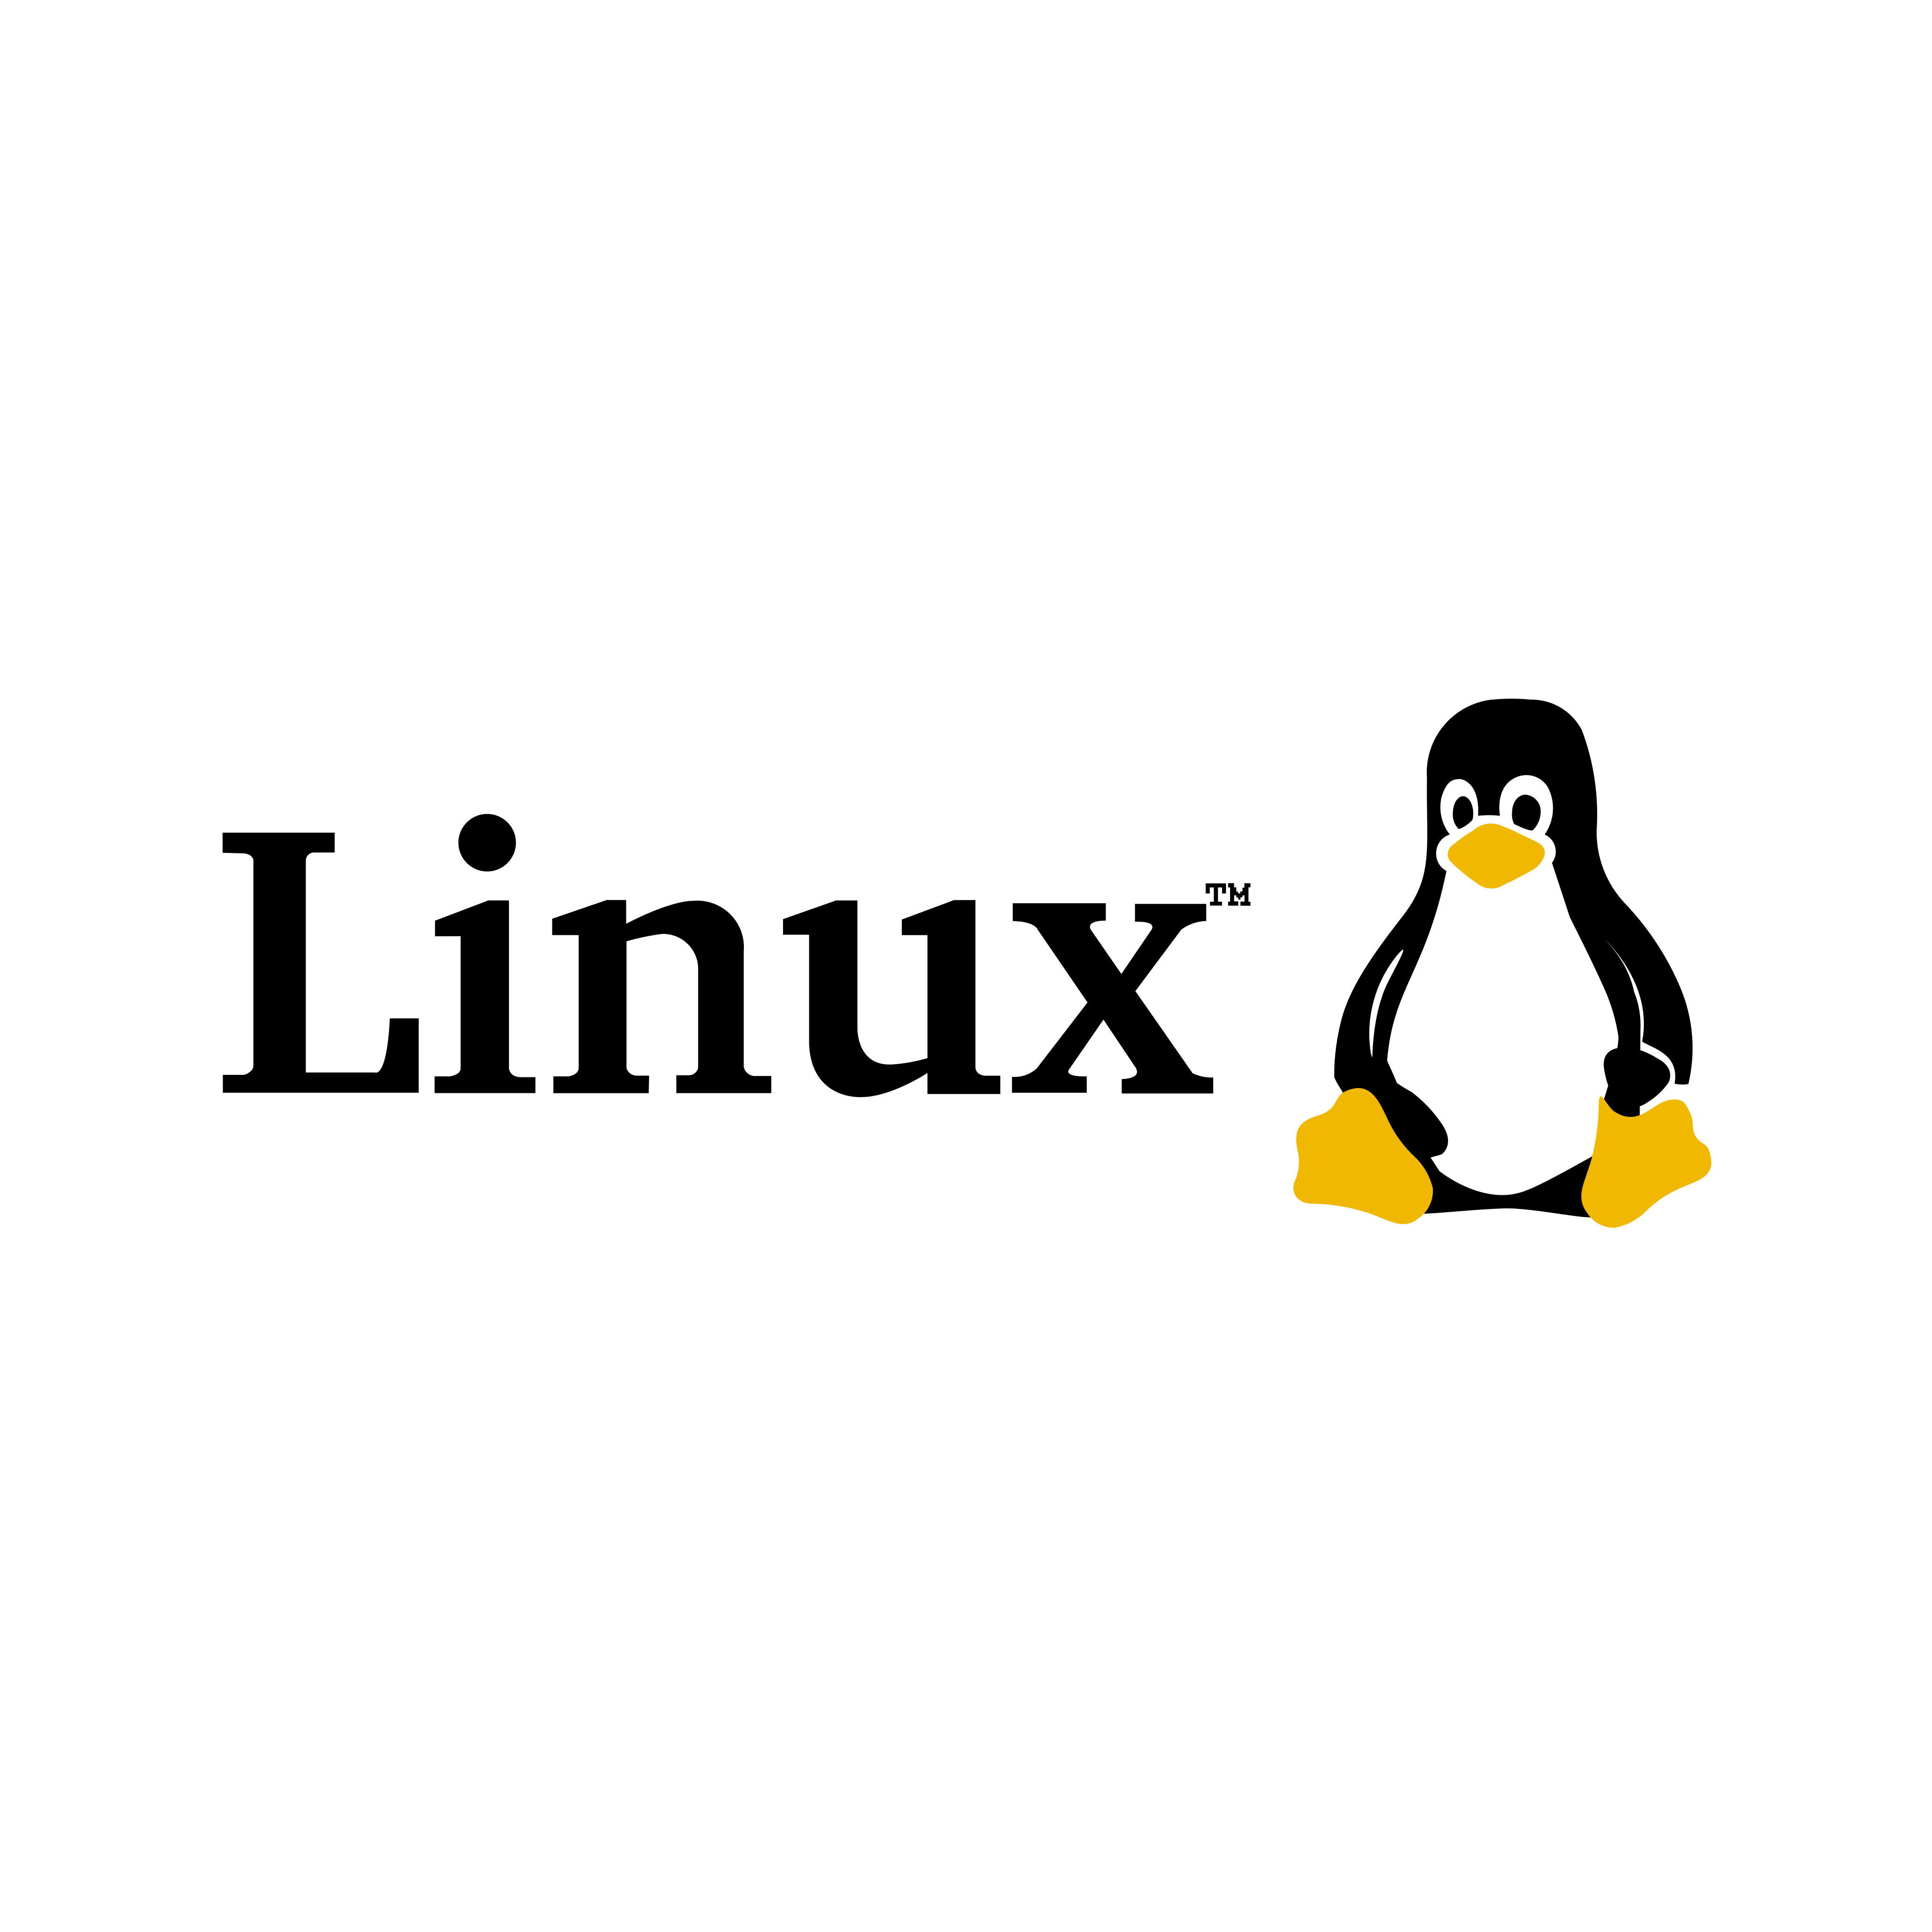 linux logo 0 - Linux Logo